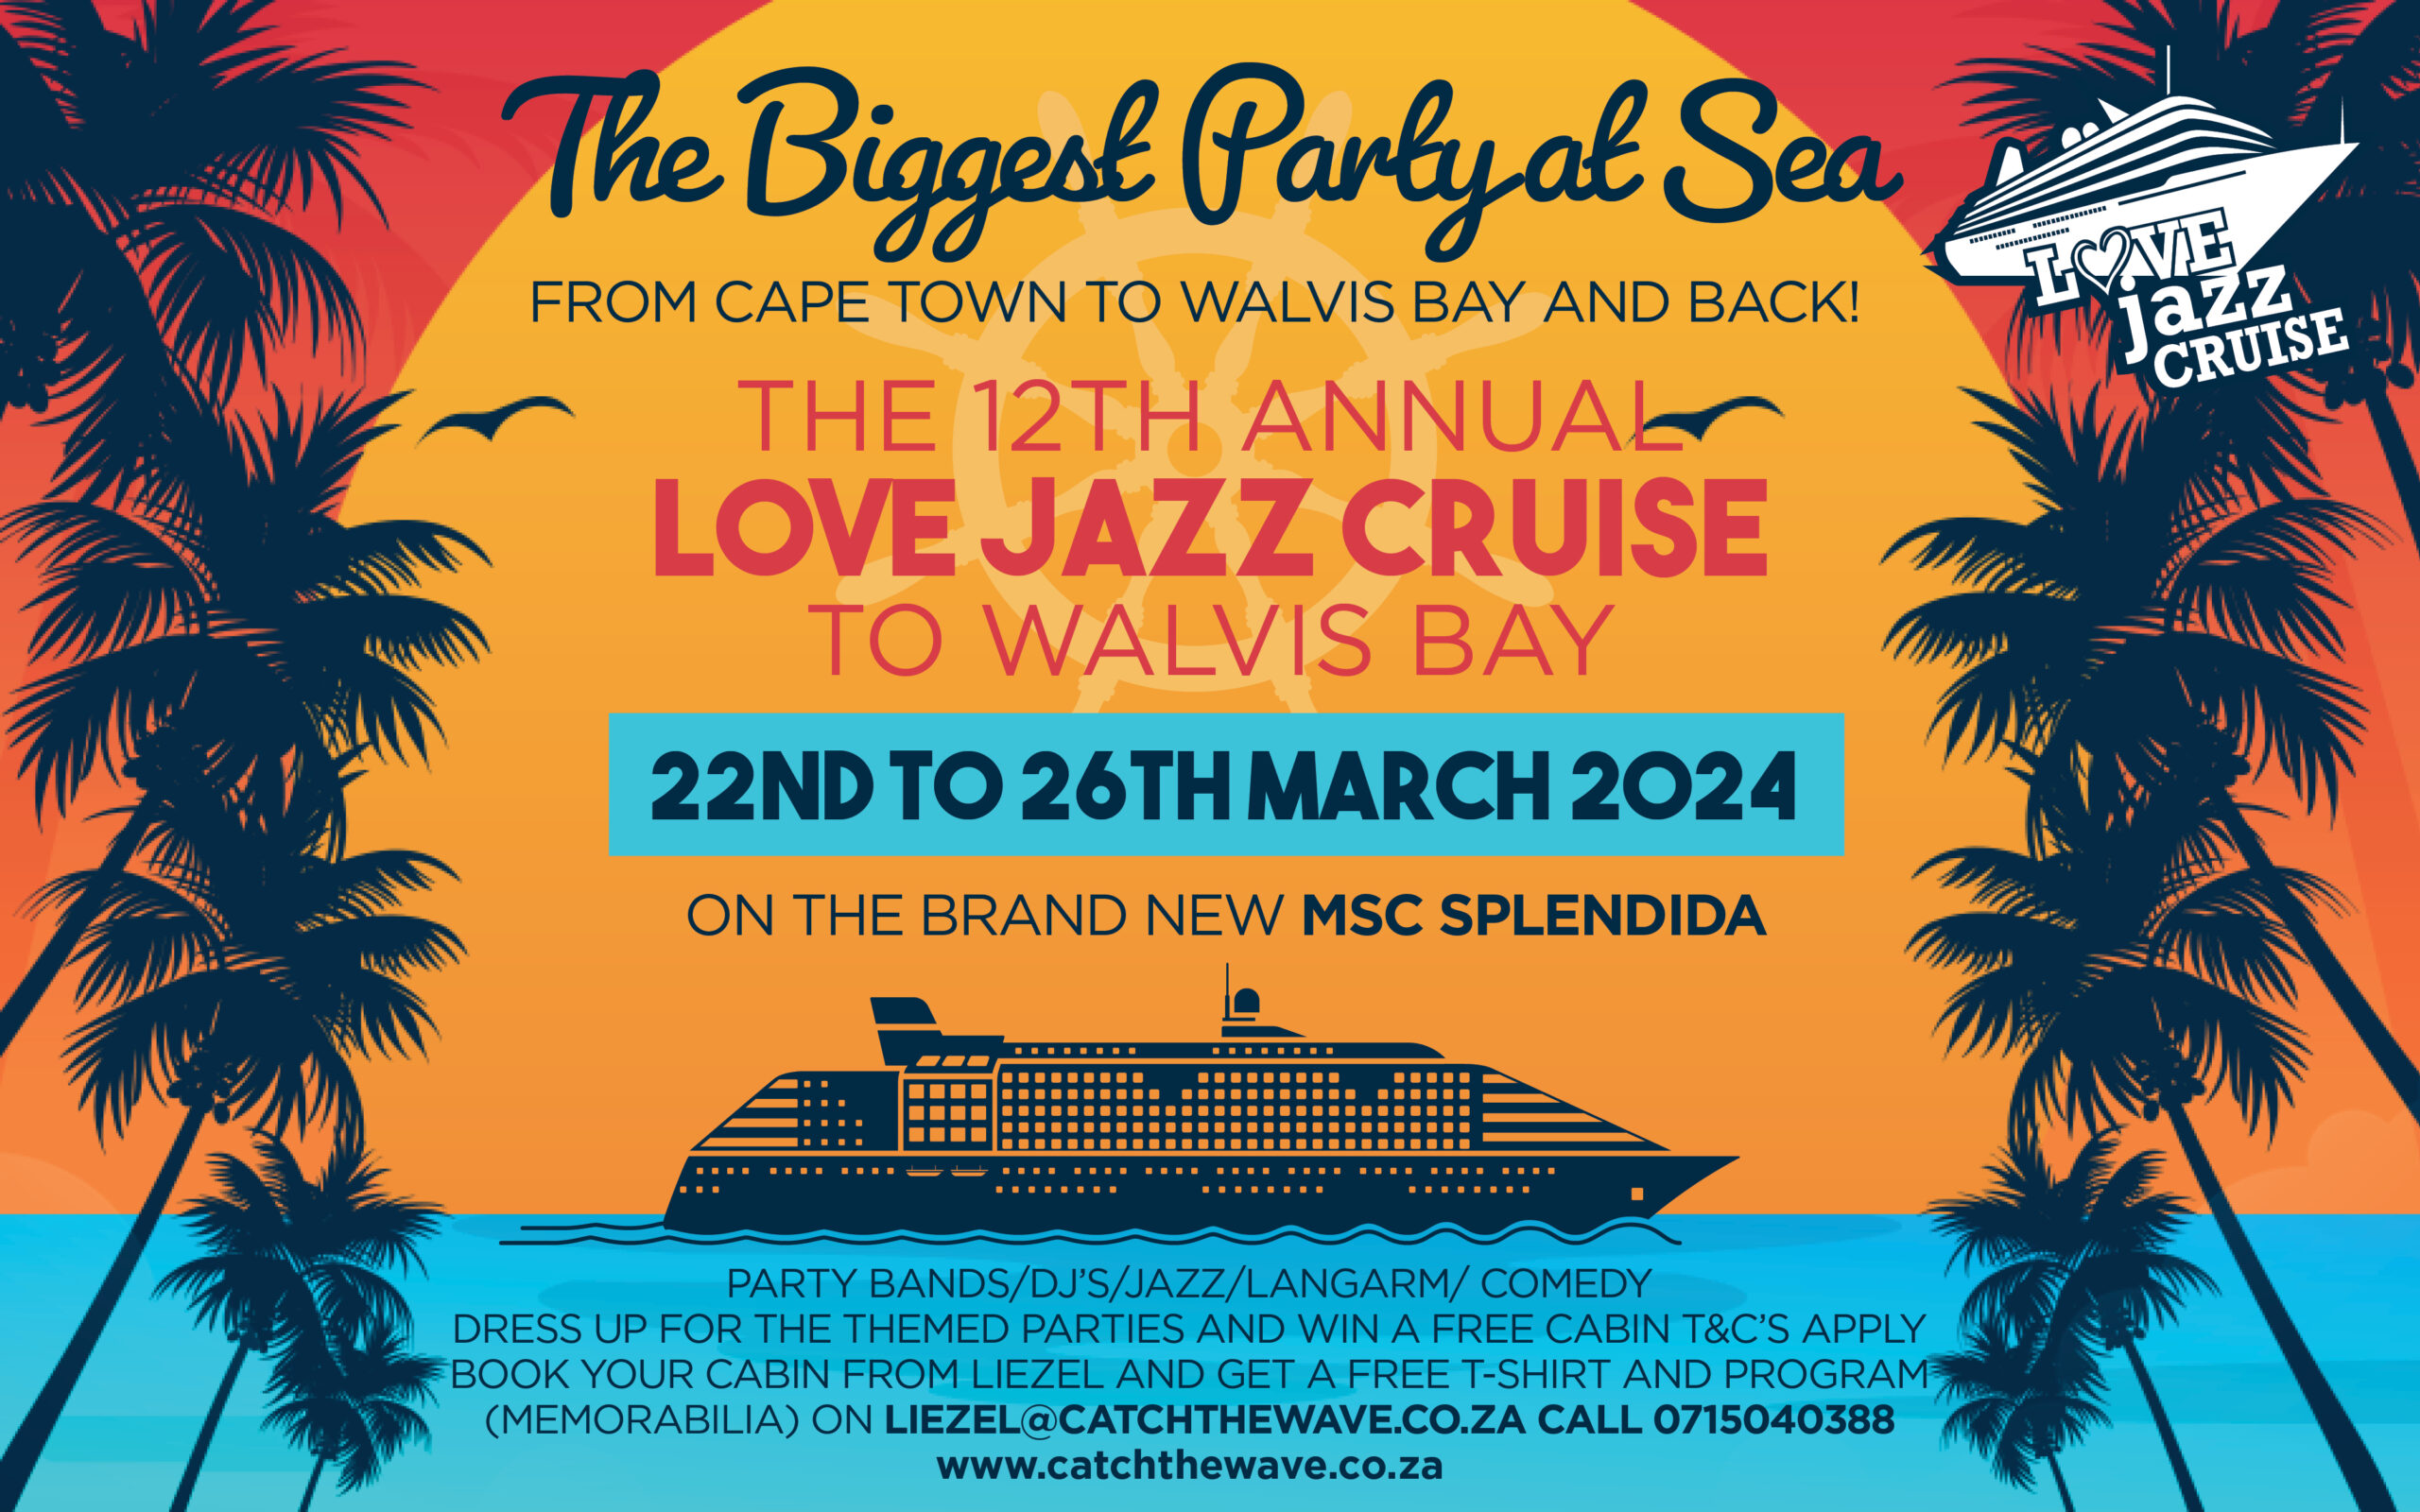 cool jazz cruise 2023